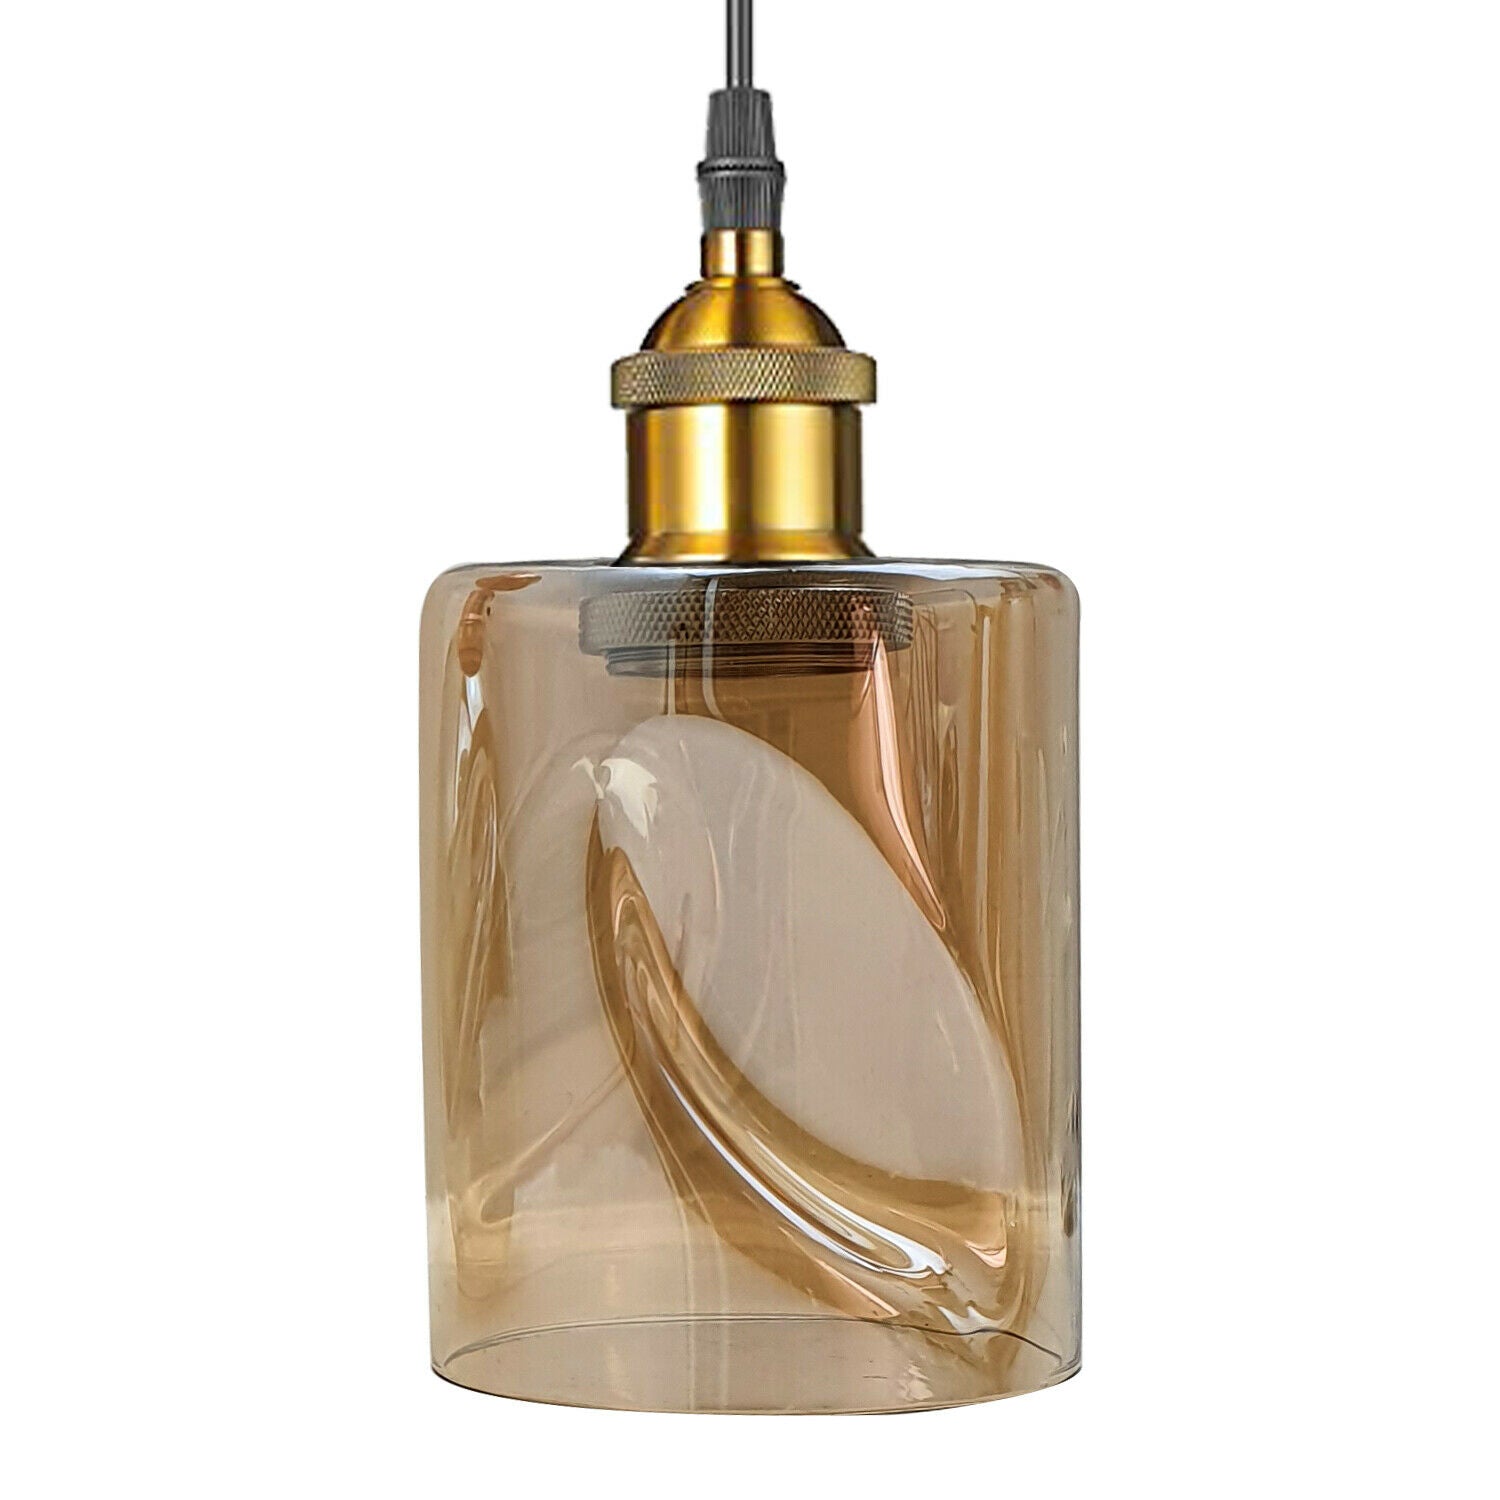 Vintage Industrial Retro Pendant Light Suspended Ceiling Lights Style Glass Lamp Shade~2054 - LEDSone UK Ltd